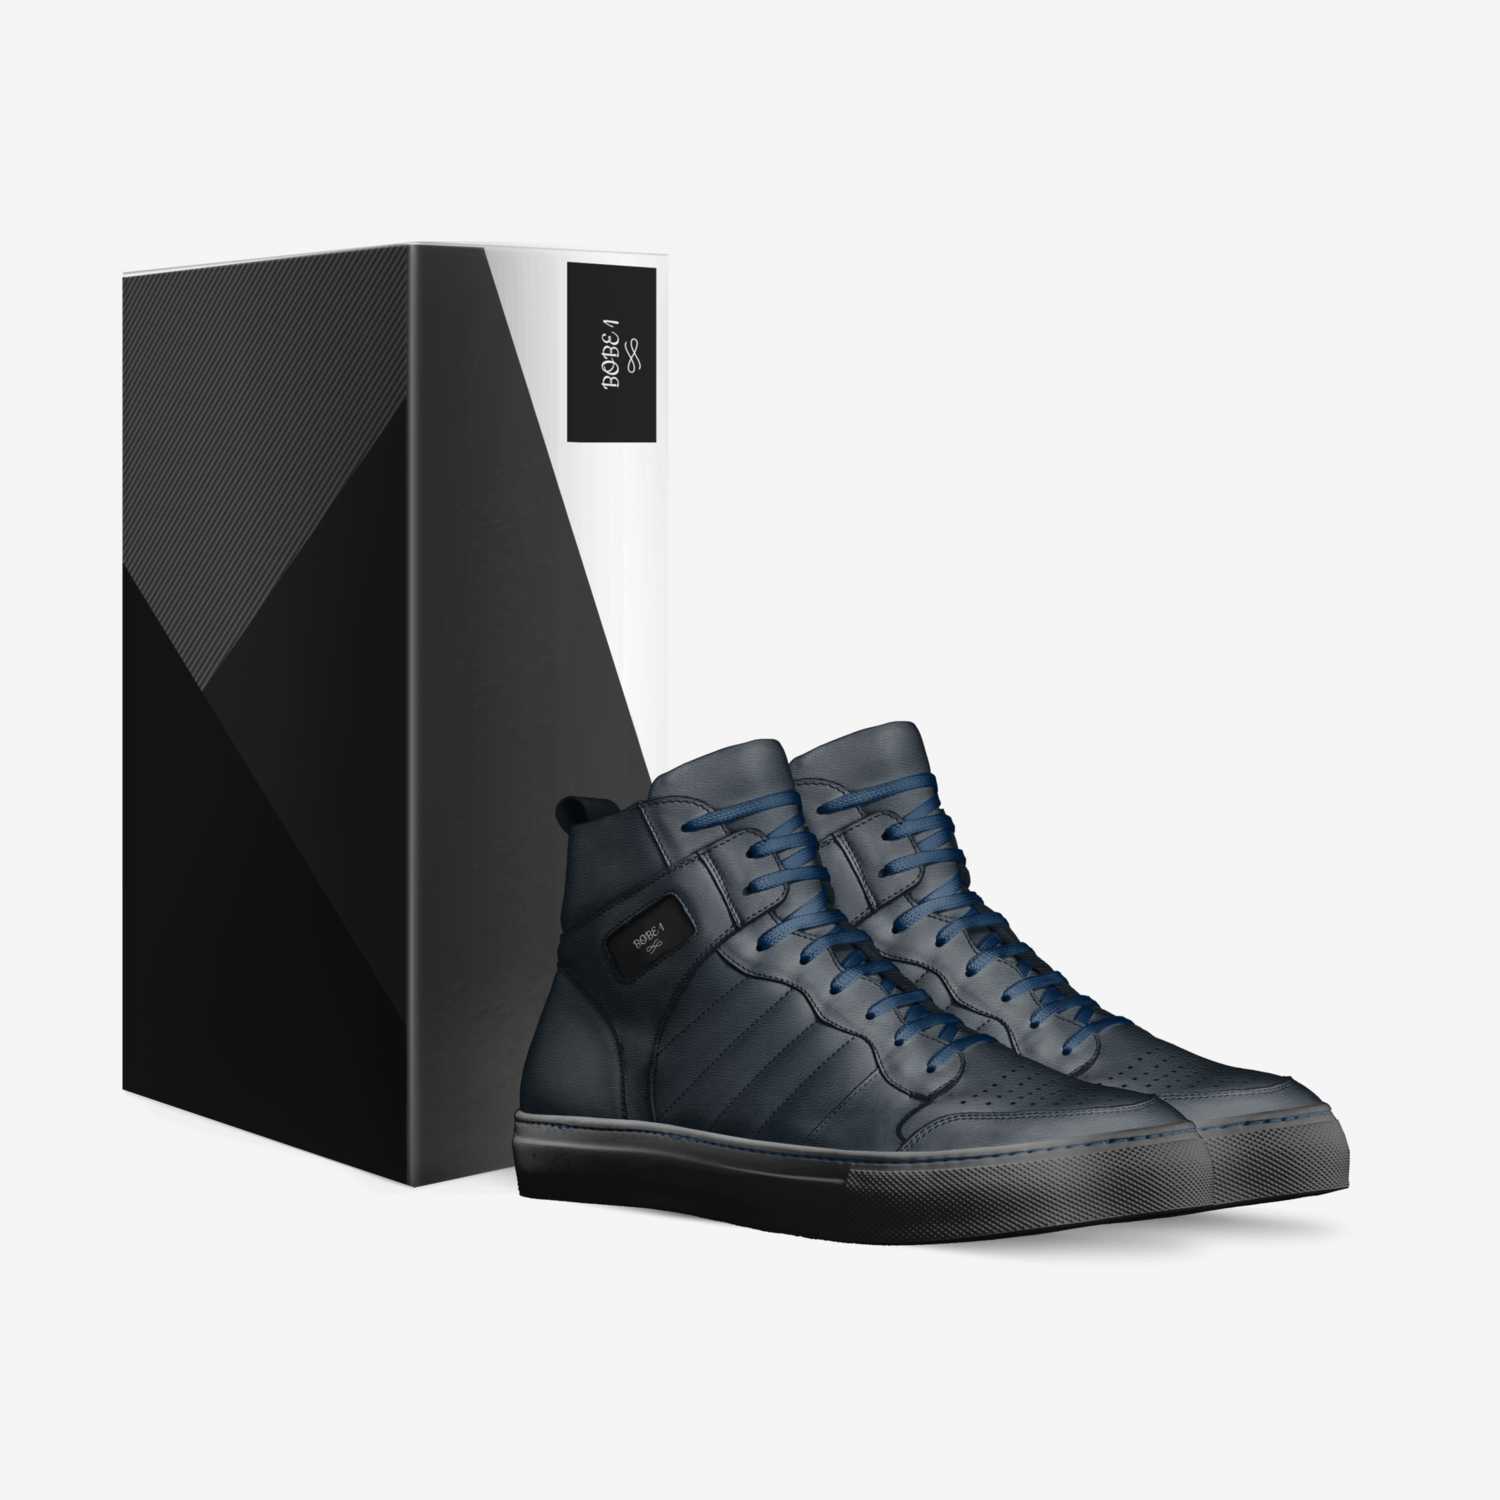 BOBE 1 custom made in Italy shoes by Bobir Asatov | Box view